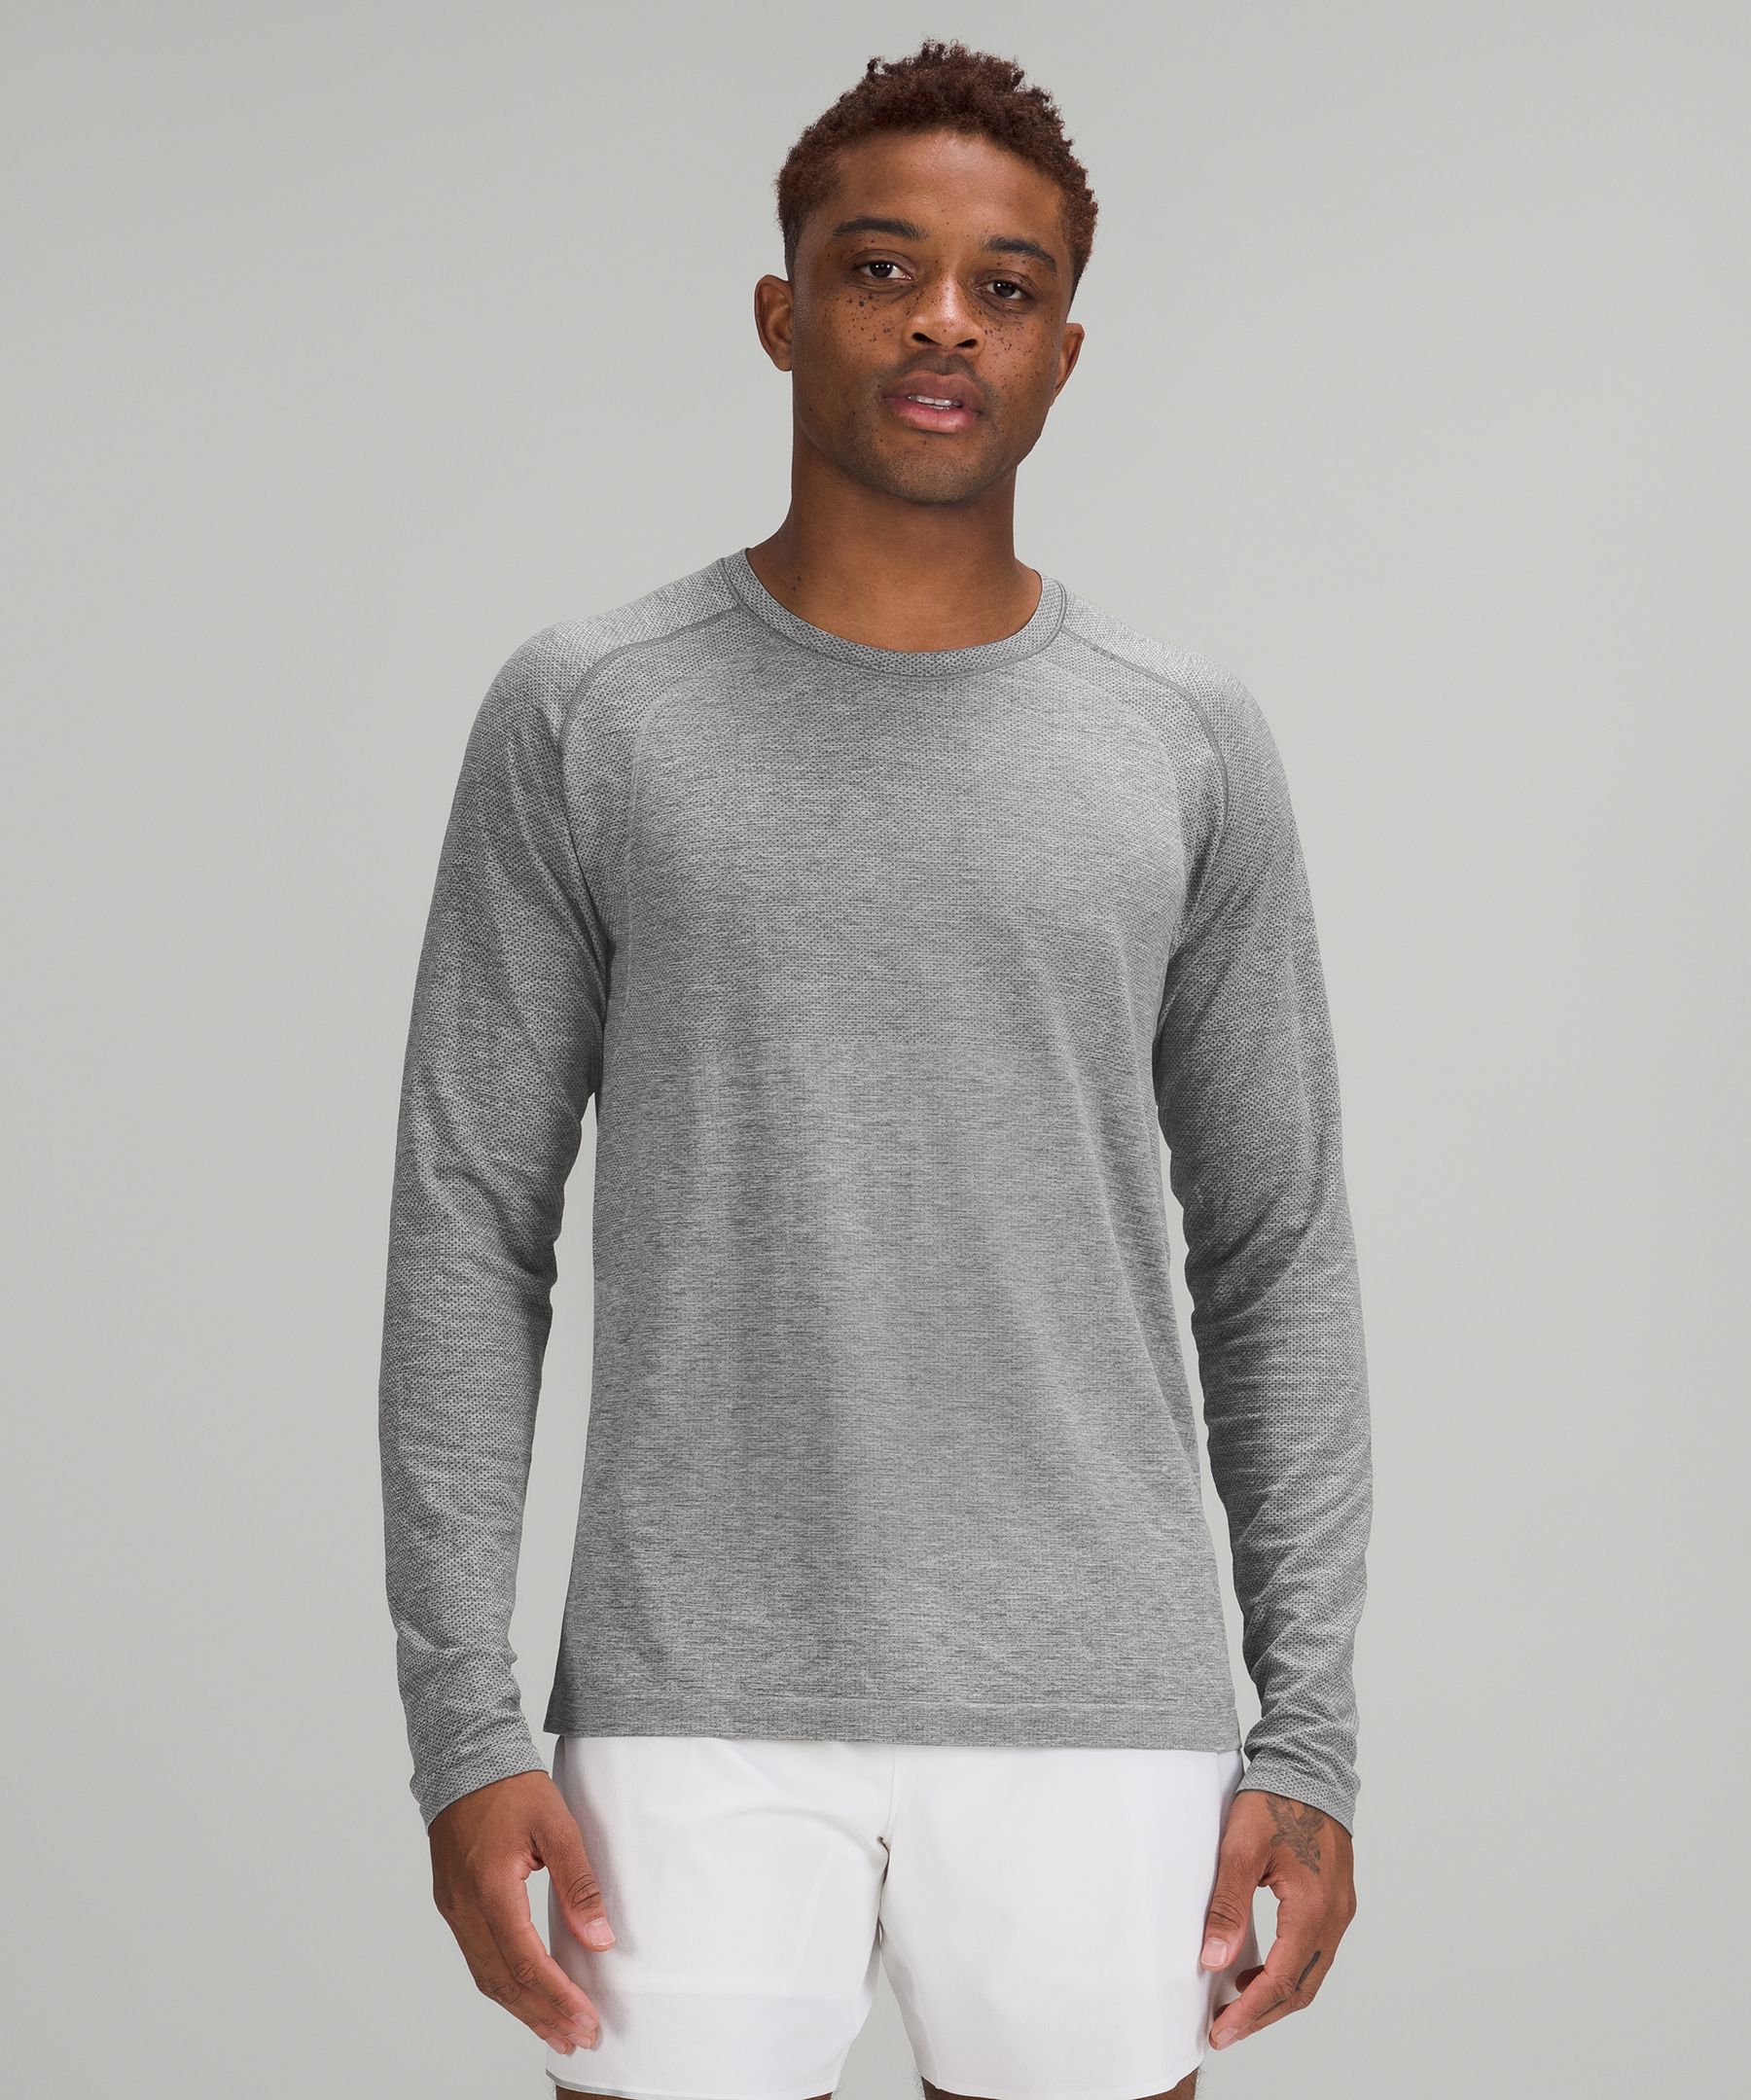 Metal Vent Tech Long Sleeve Shirt 2.0 In Grey